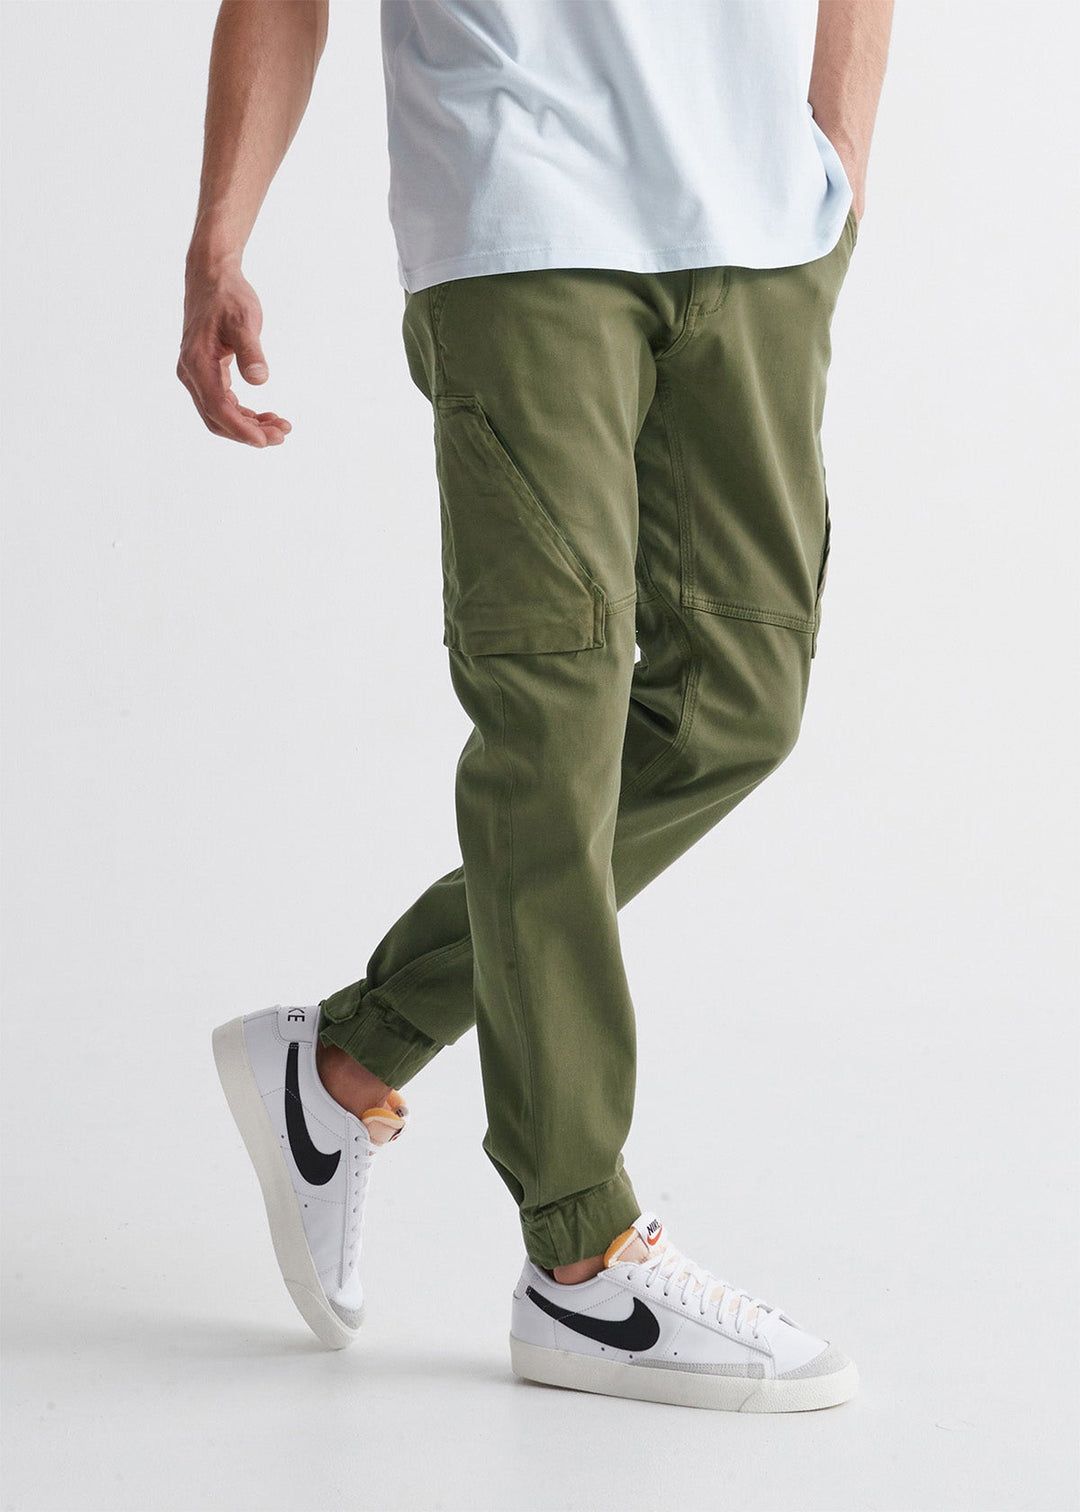 fcityin  Cream Color Trendy Comfortable Men Cargo Pants Stylish Cargo  Pants